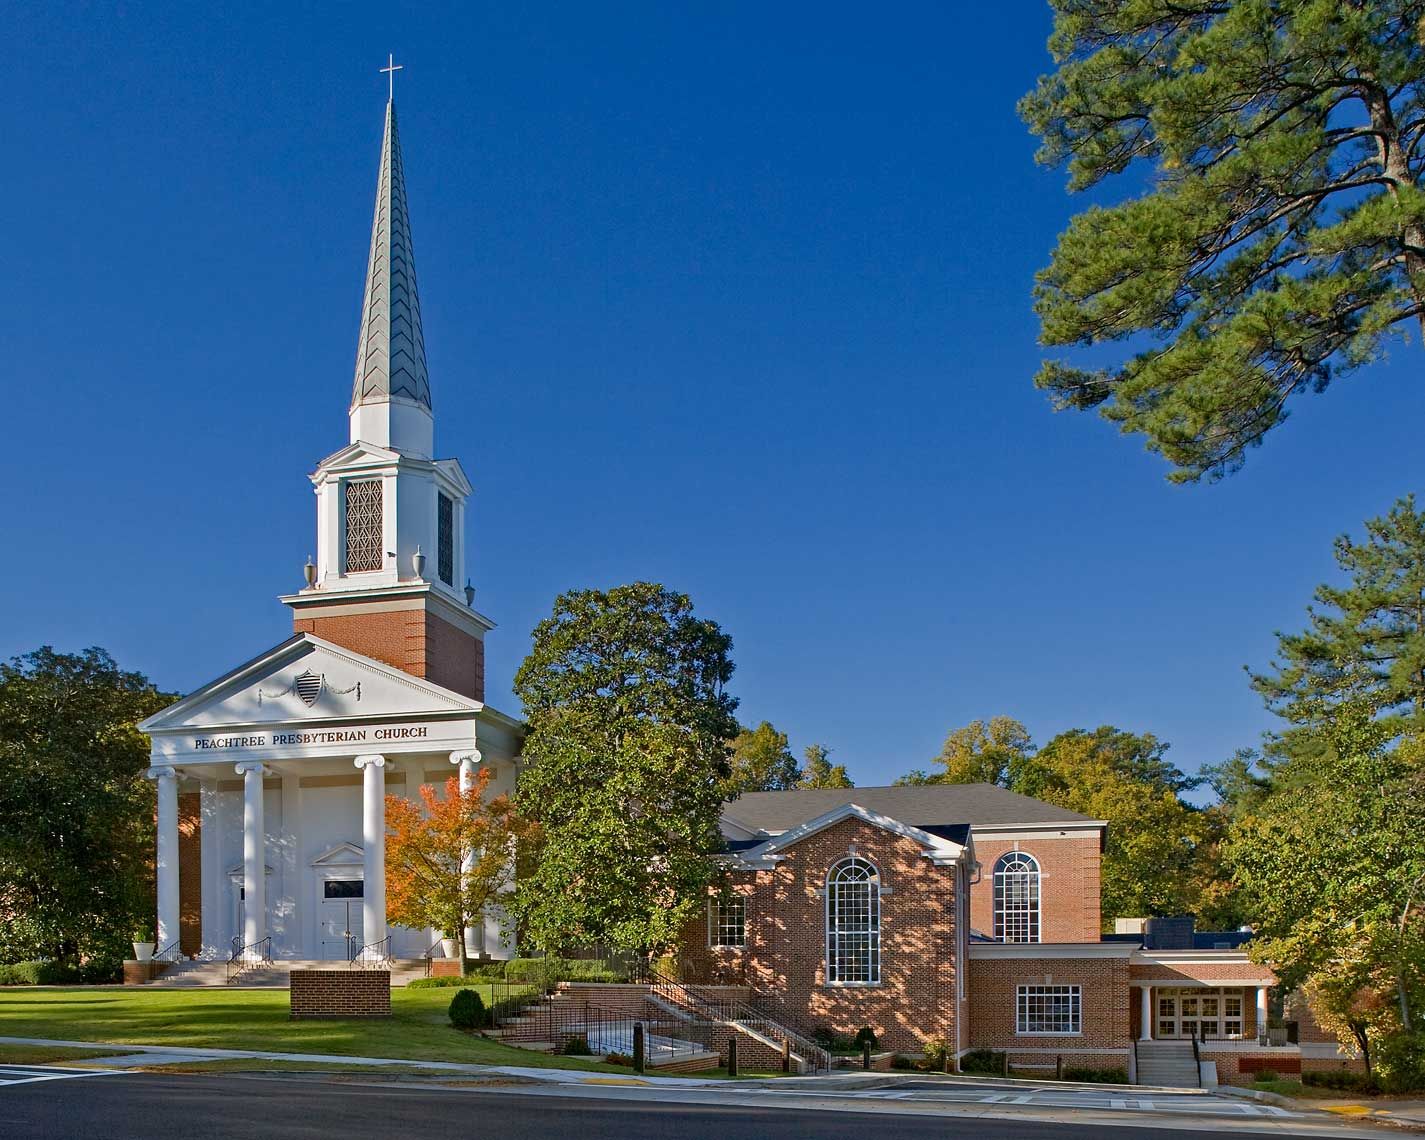 A pleasant exterior view of the Peachtree Presbyterian Church in Atlanta, Georgia